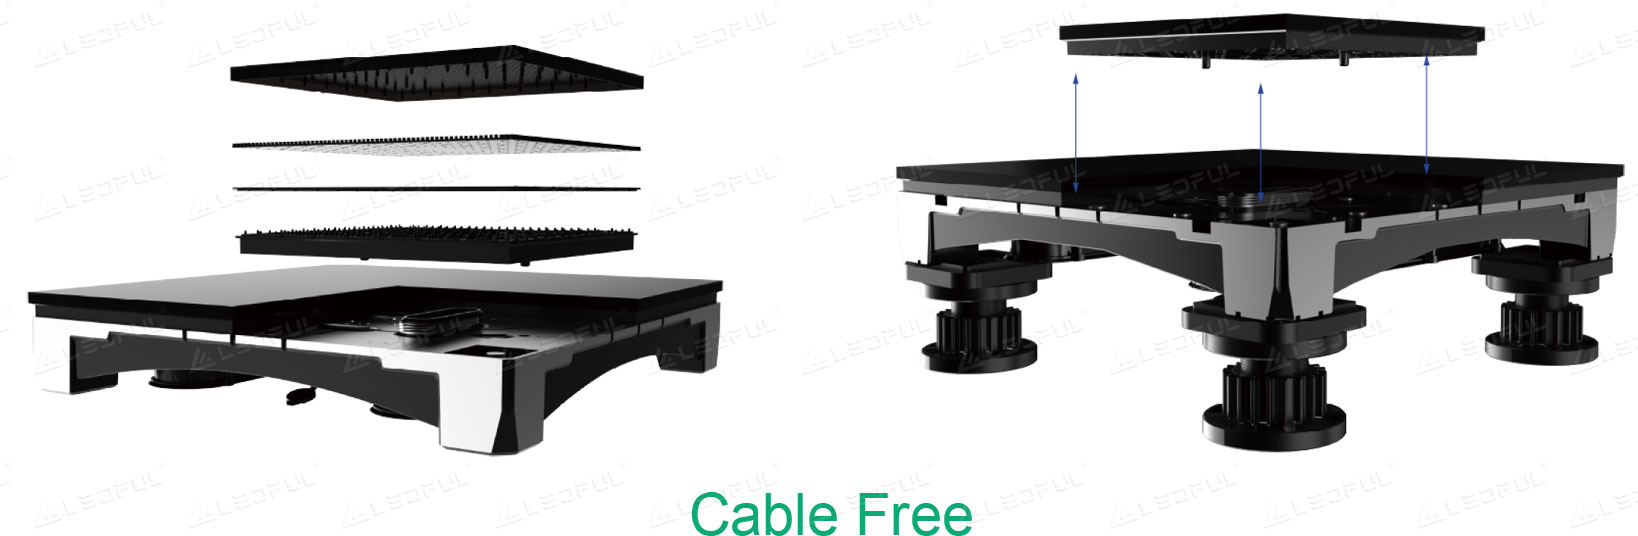 Integriertes Design Kabel frei